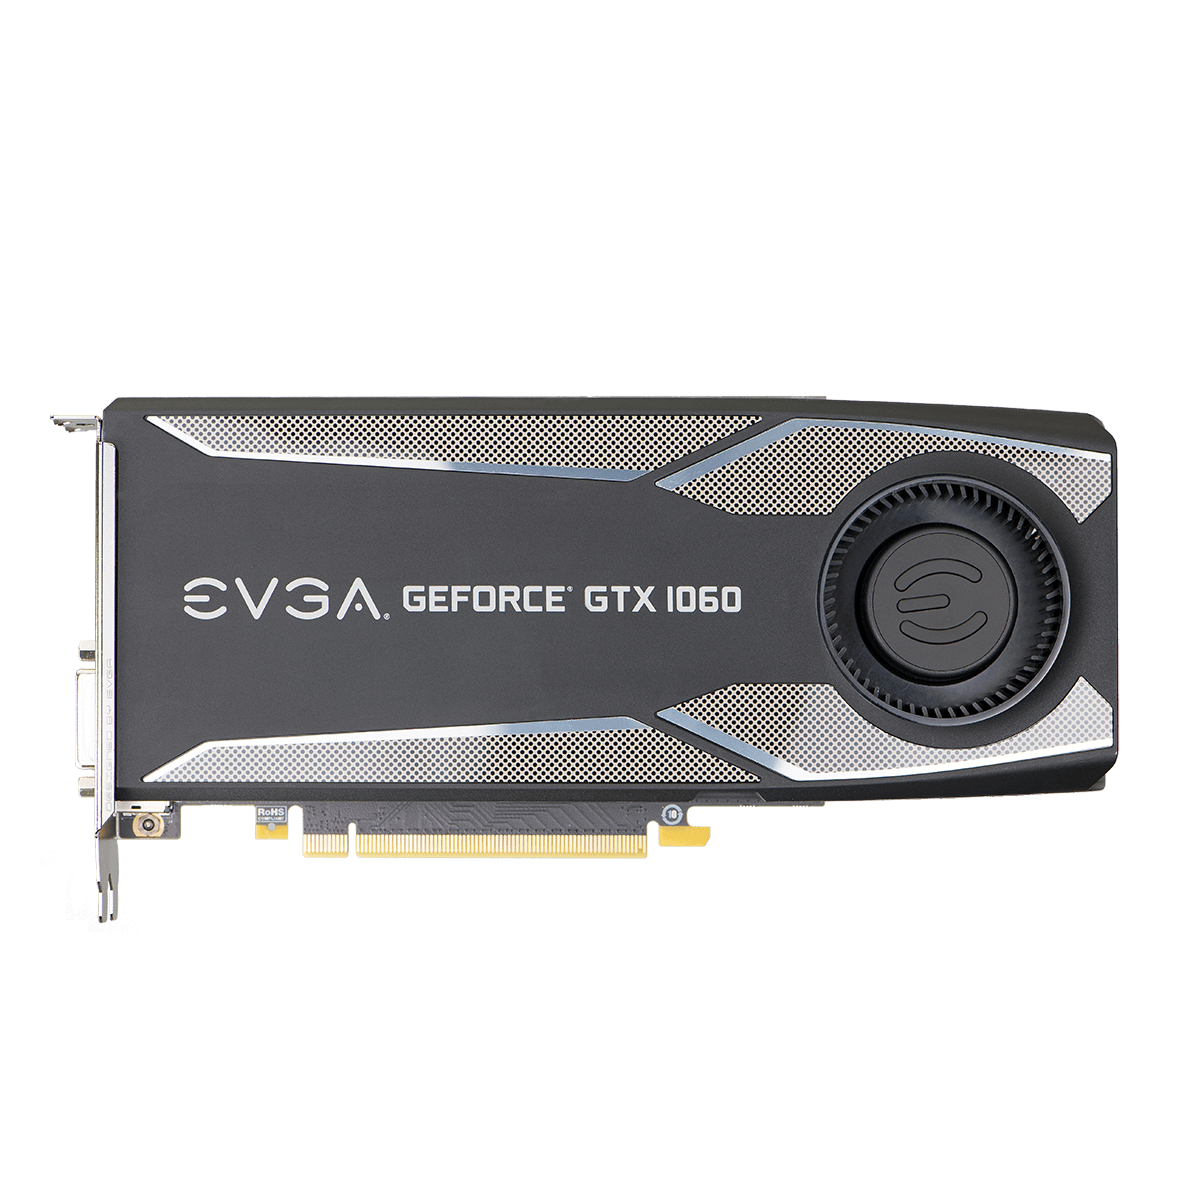 EVGA - Asia - Products - EVGA GeForce GTX 1060 GAMING, 06G-P4-5161 